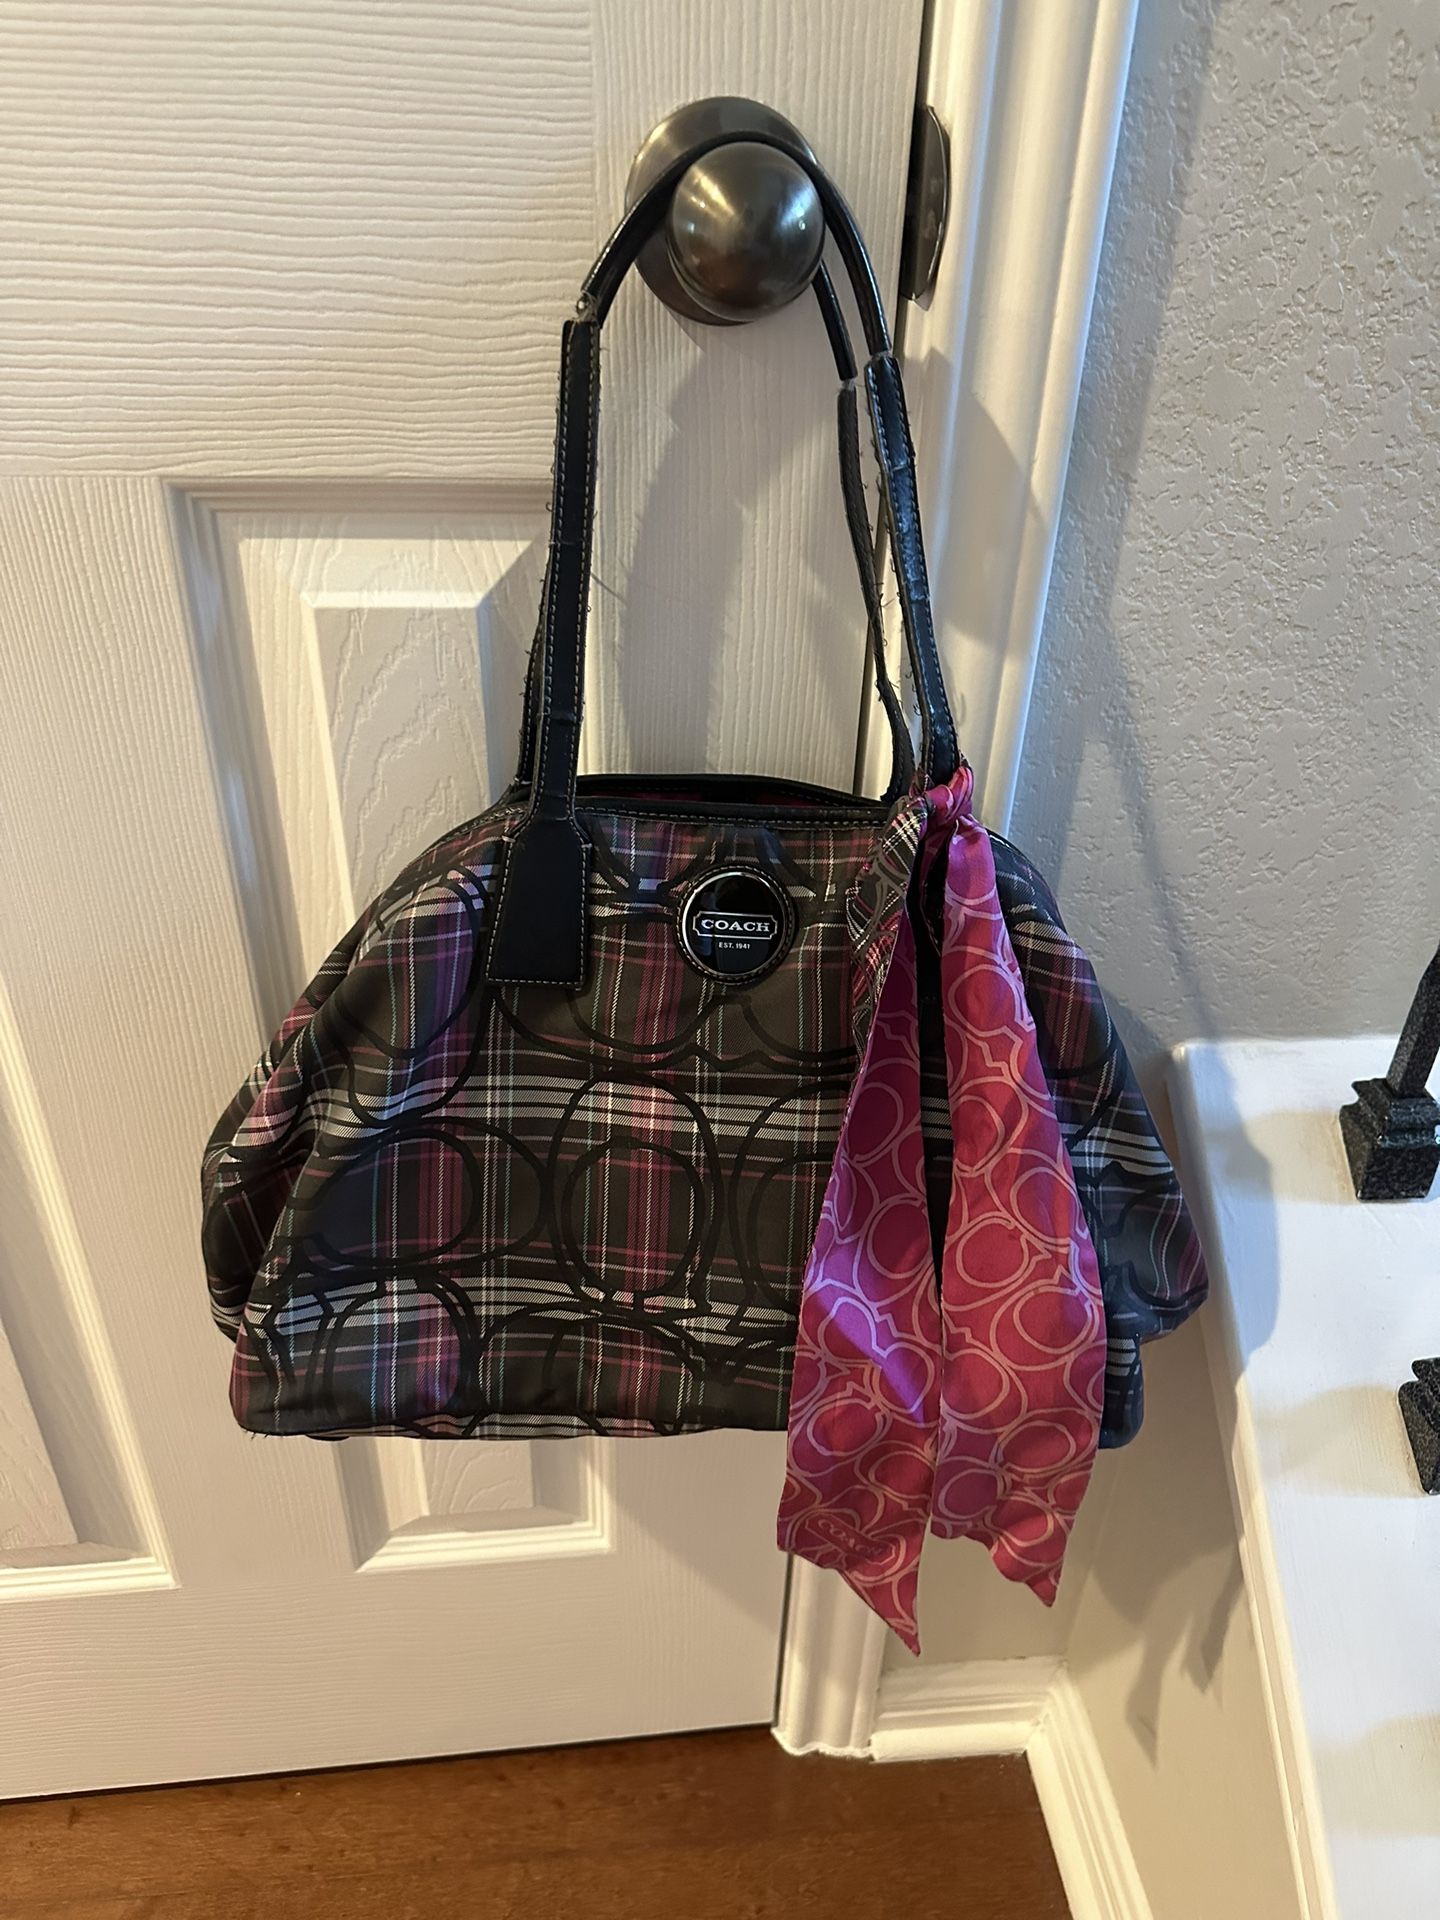 Two COACH purses